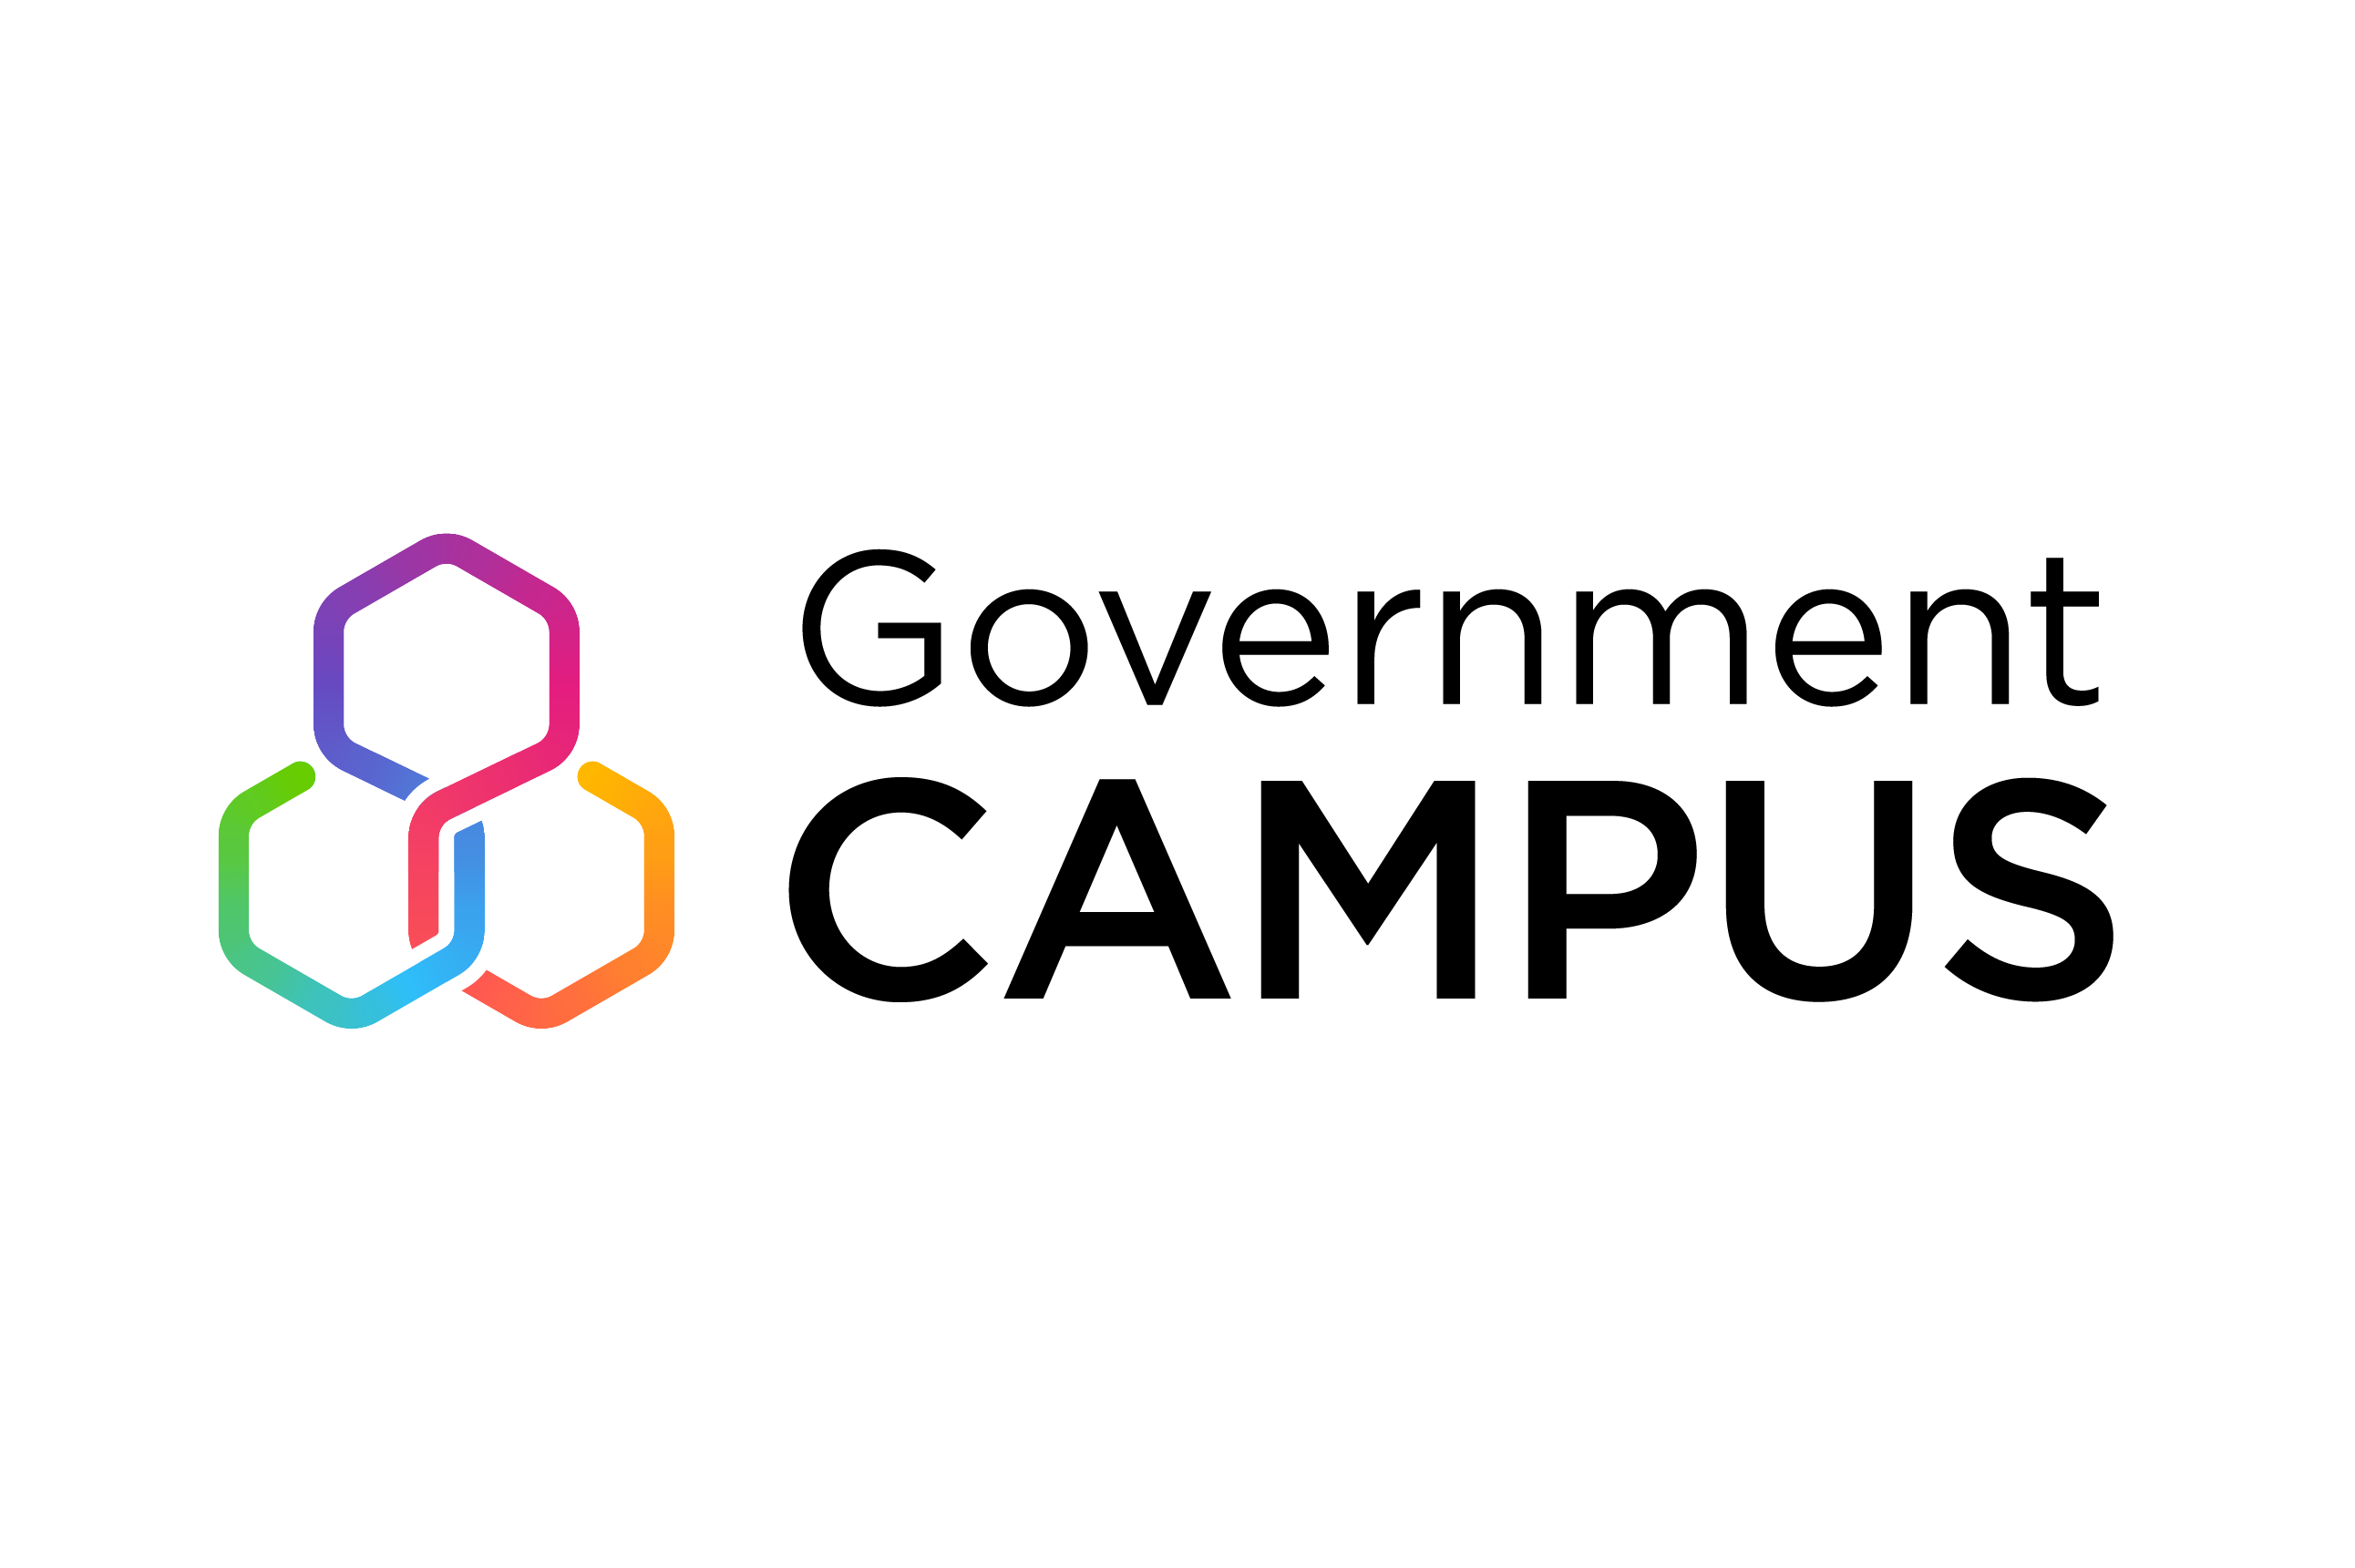 Government Campus logo featuring three multi-coloured hexagons